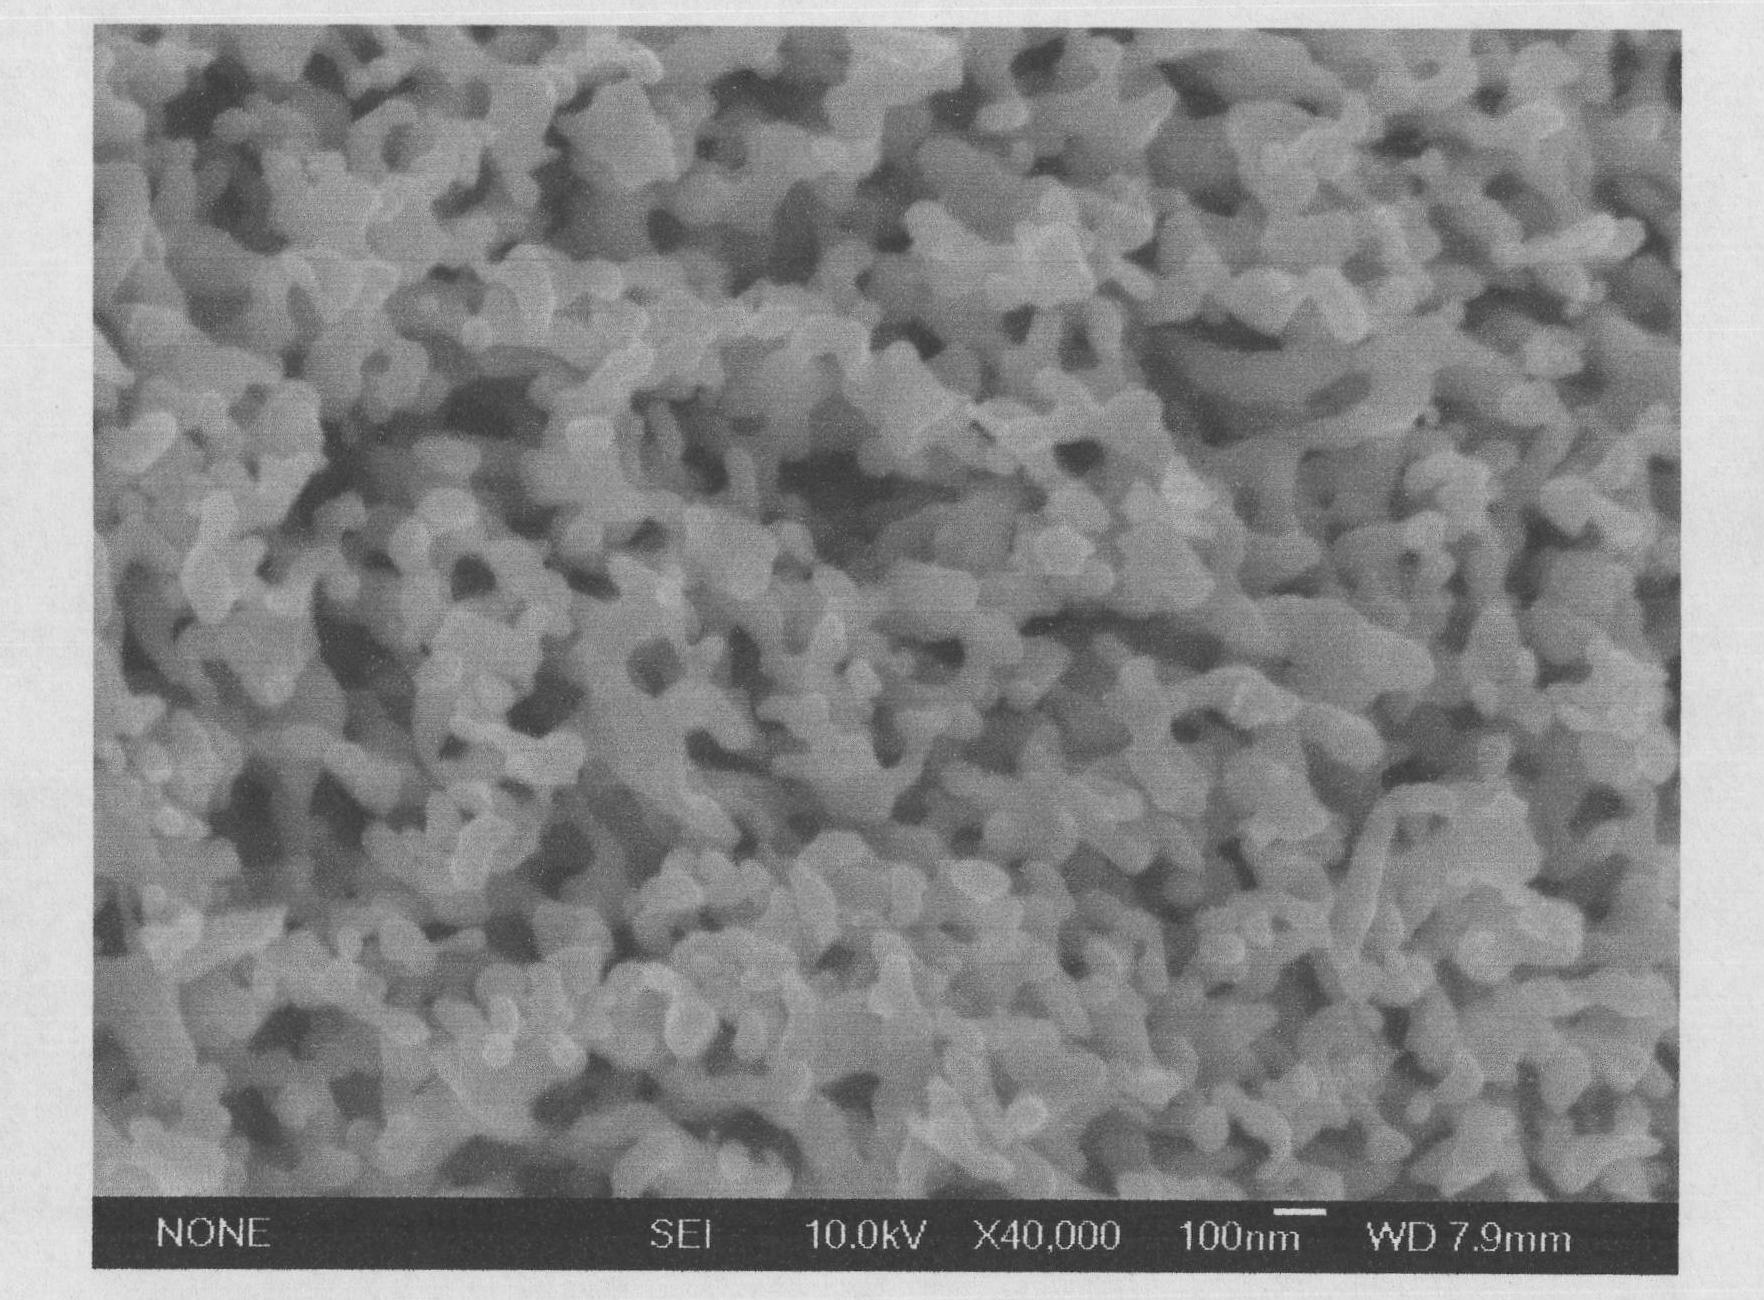 Method for preparing nano porous copper by adopting Cu-Zn alloy